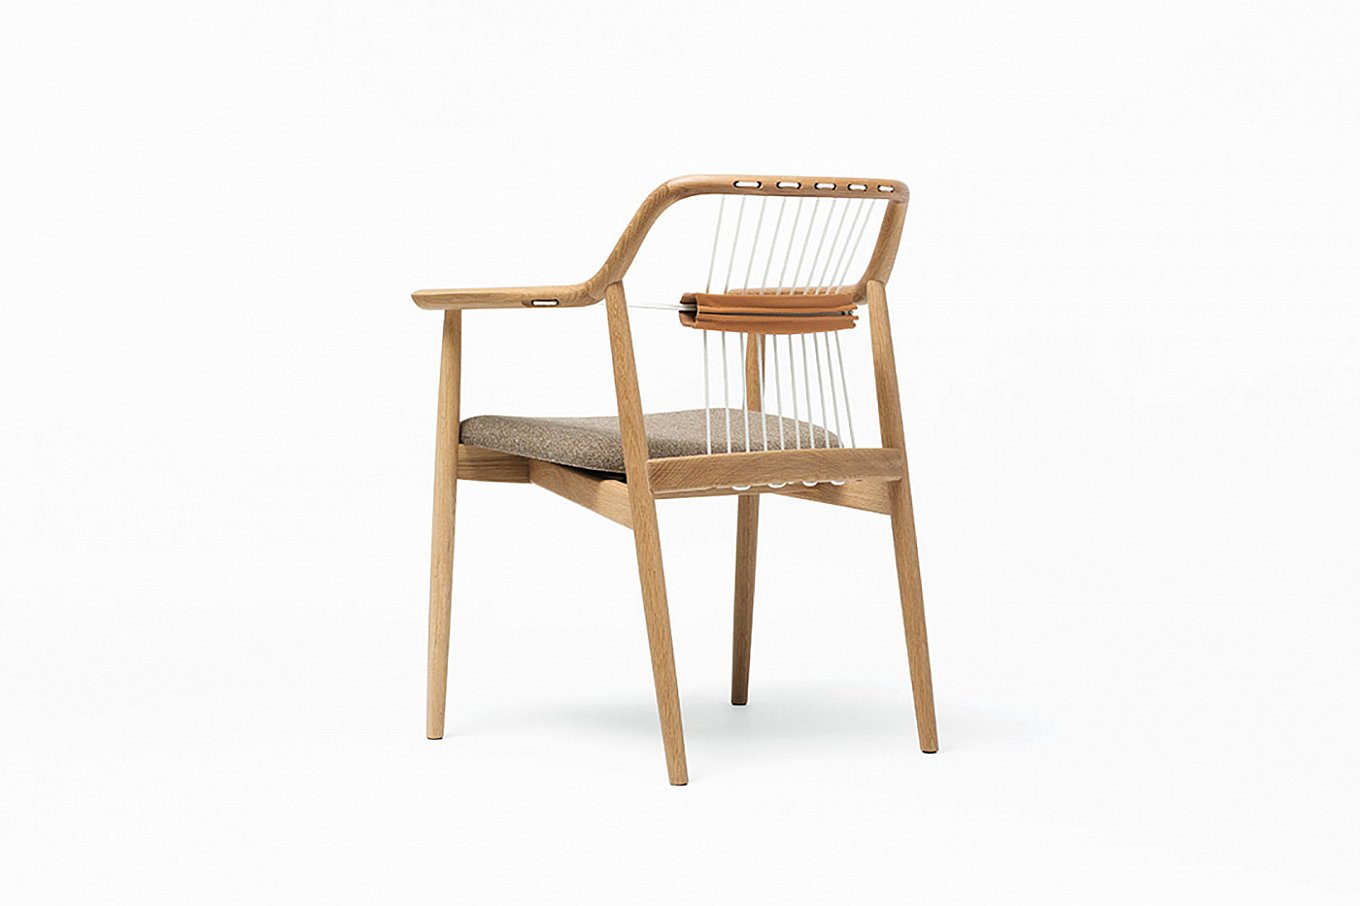 yc1-chair-by-mikiya-kobayashi-8